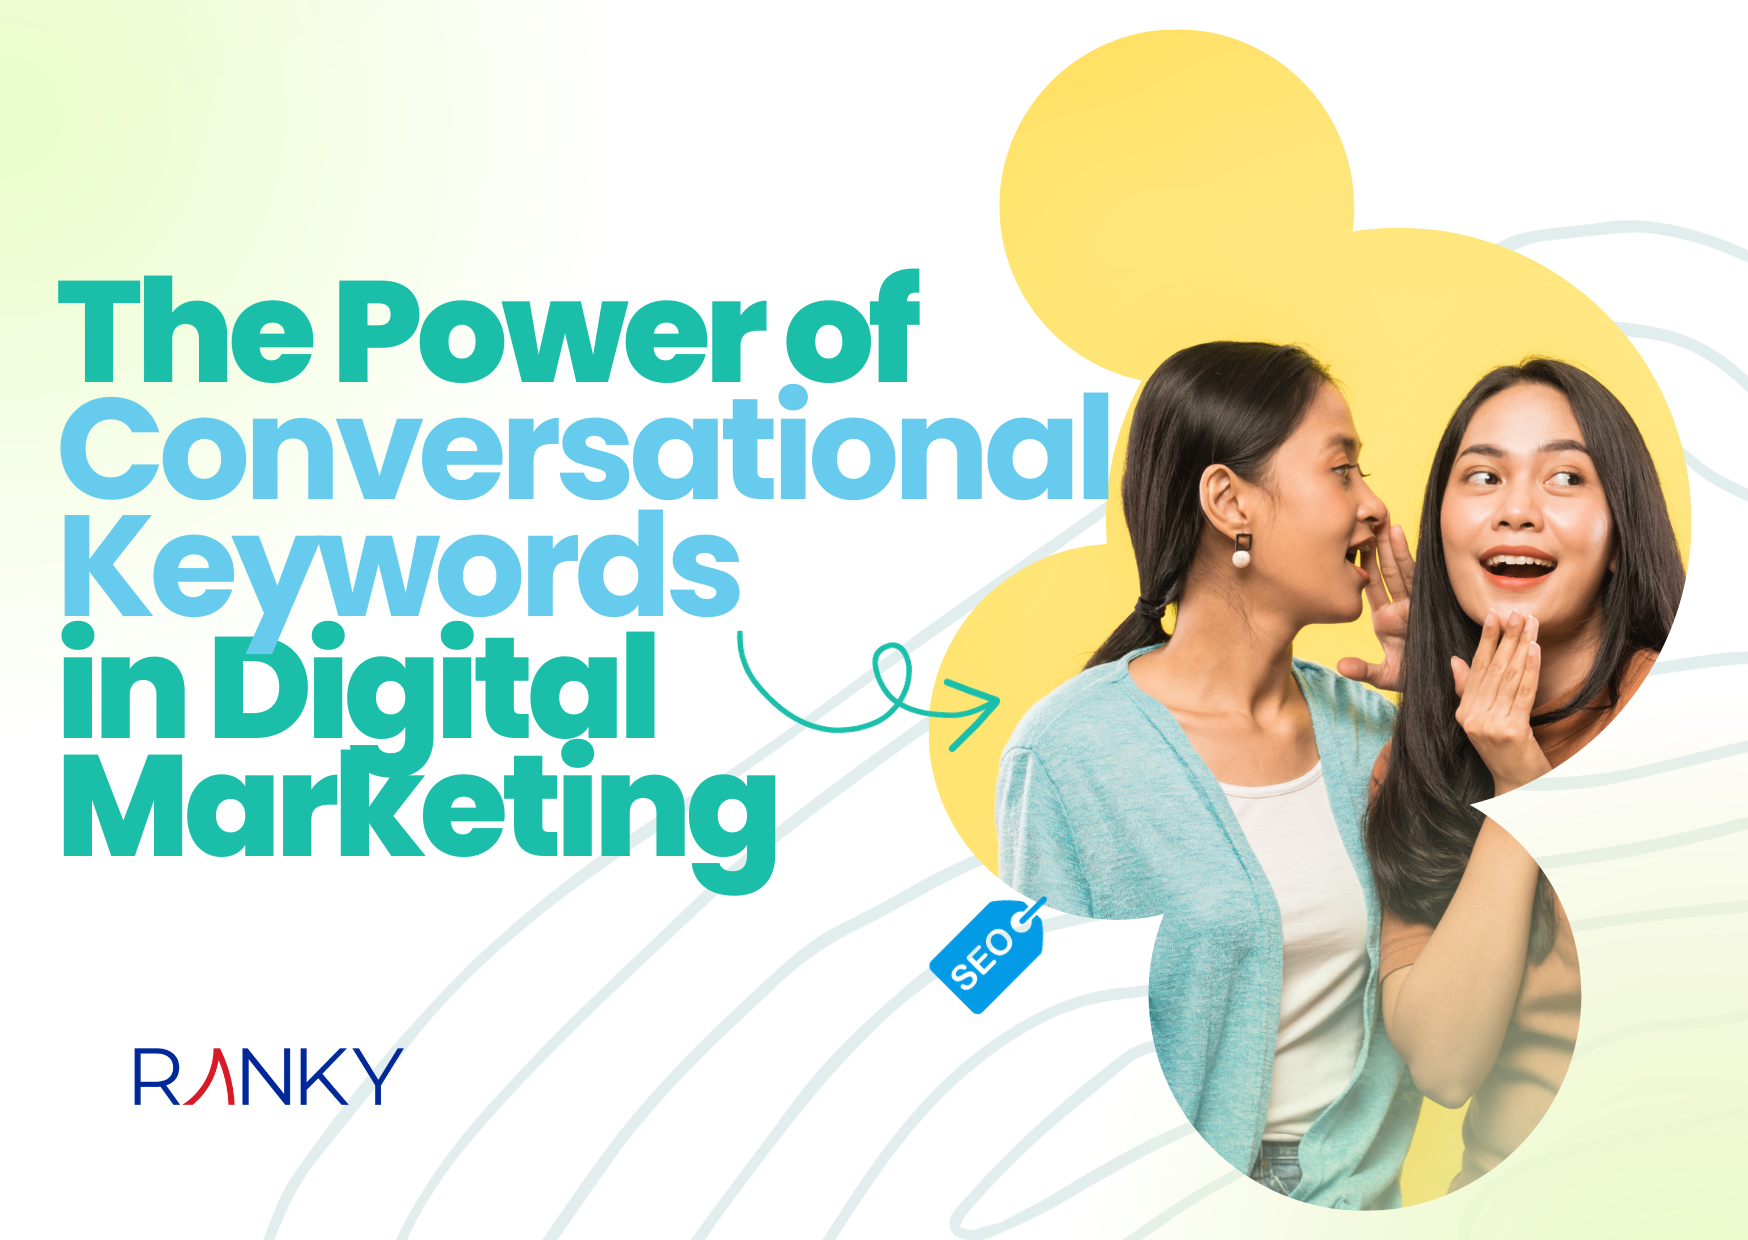 Conversational Keywords in digital marketing